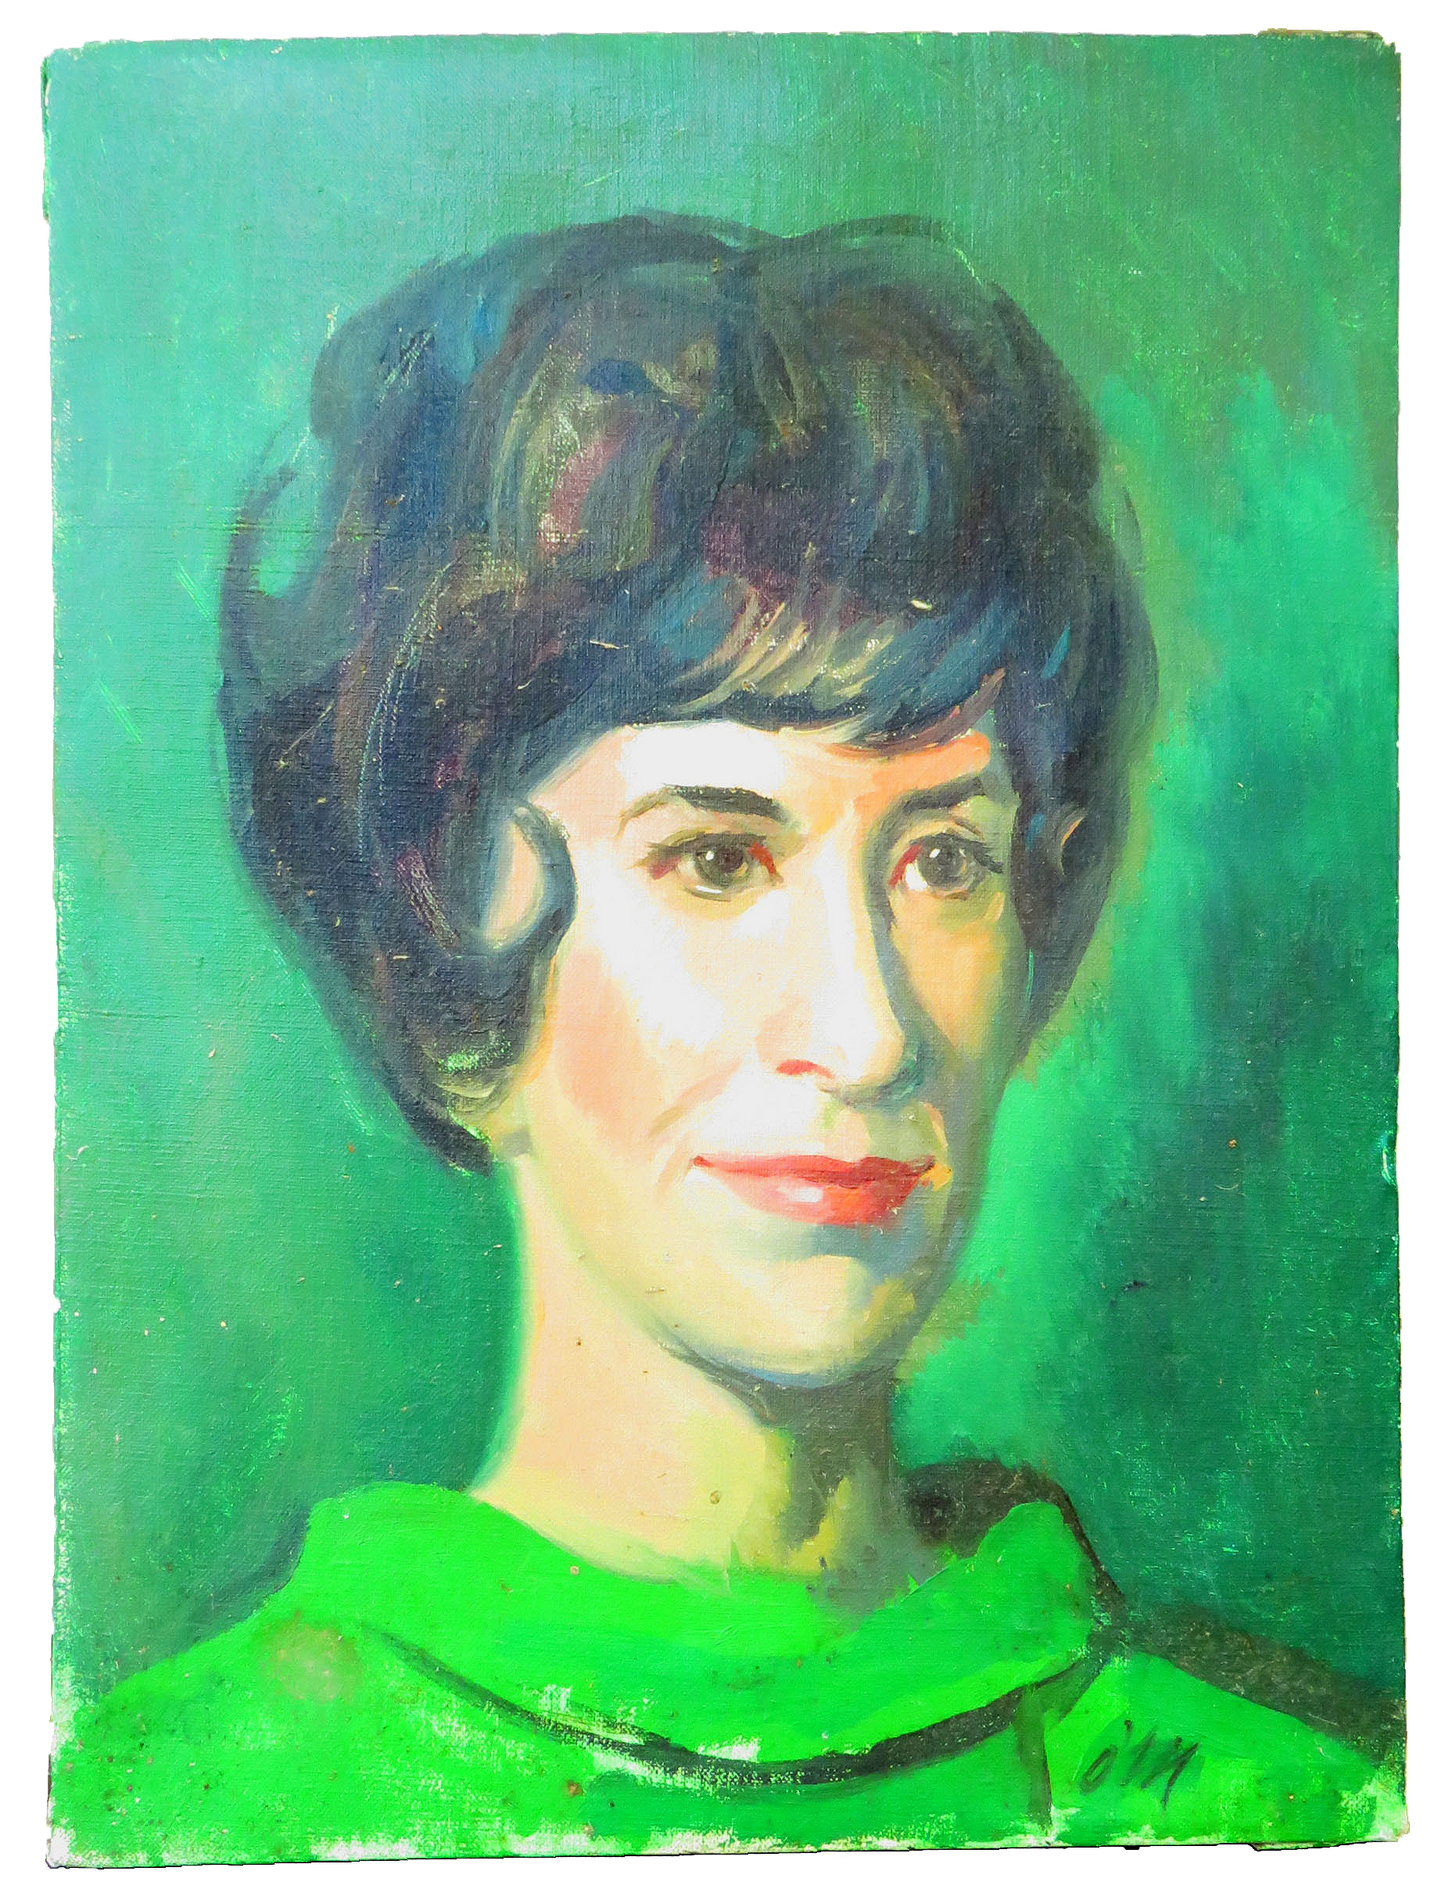 1960s Female Portrait - a Study in Green